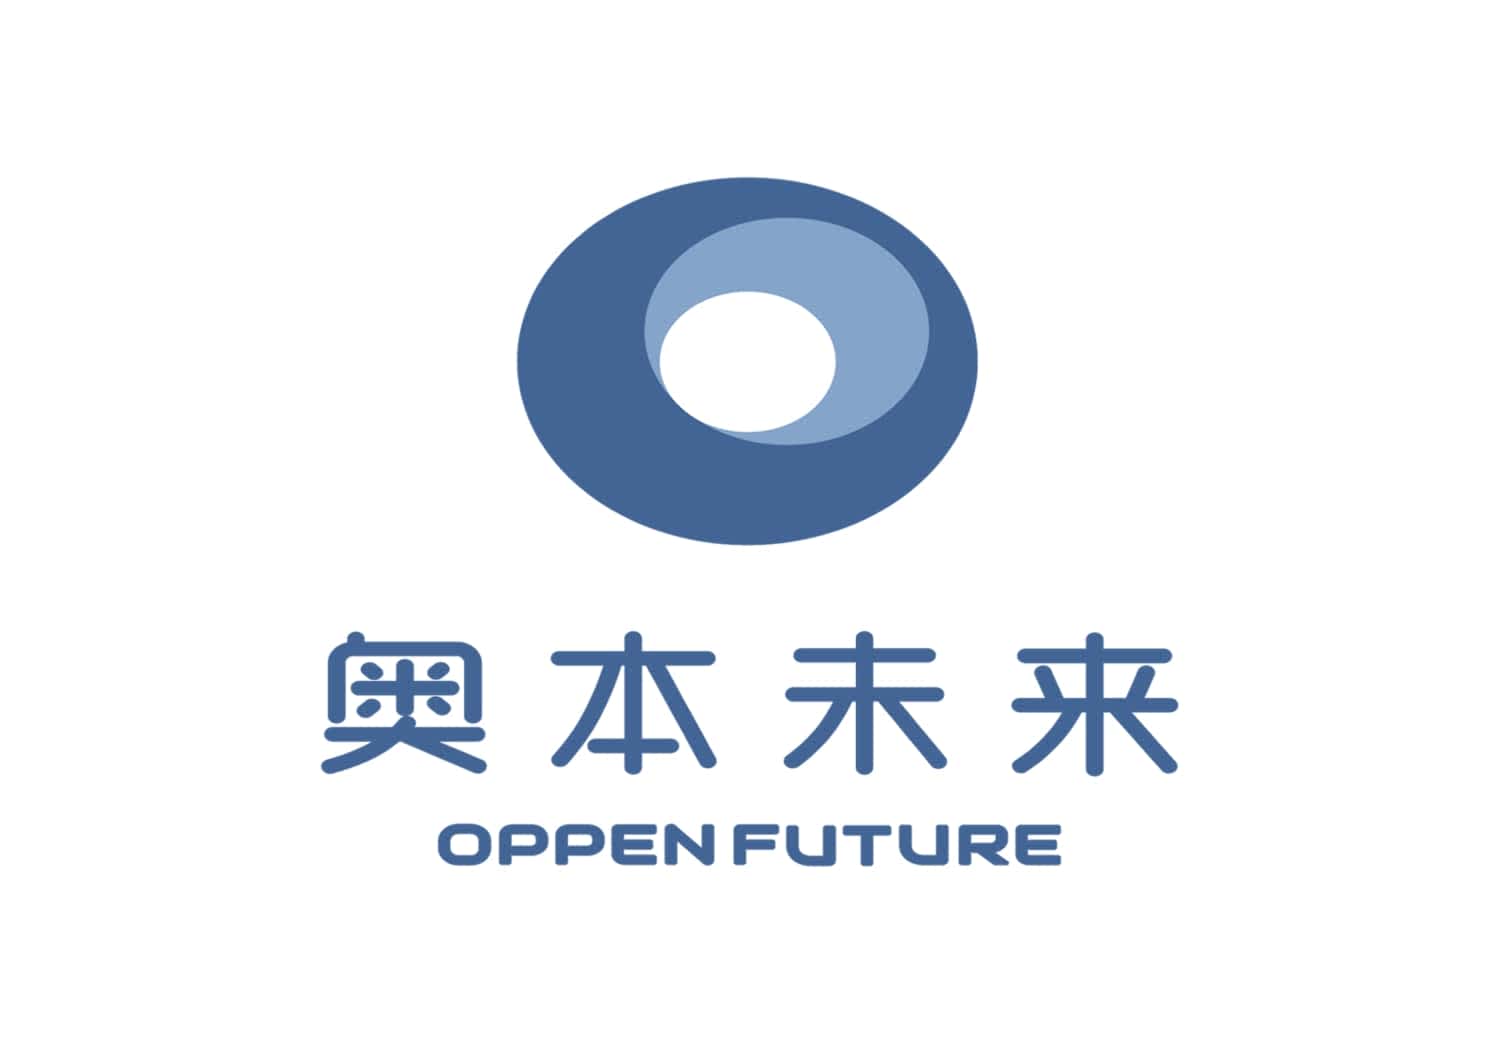 Oppen+future-min